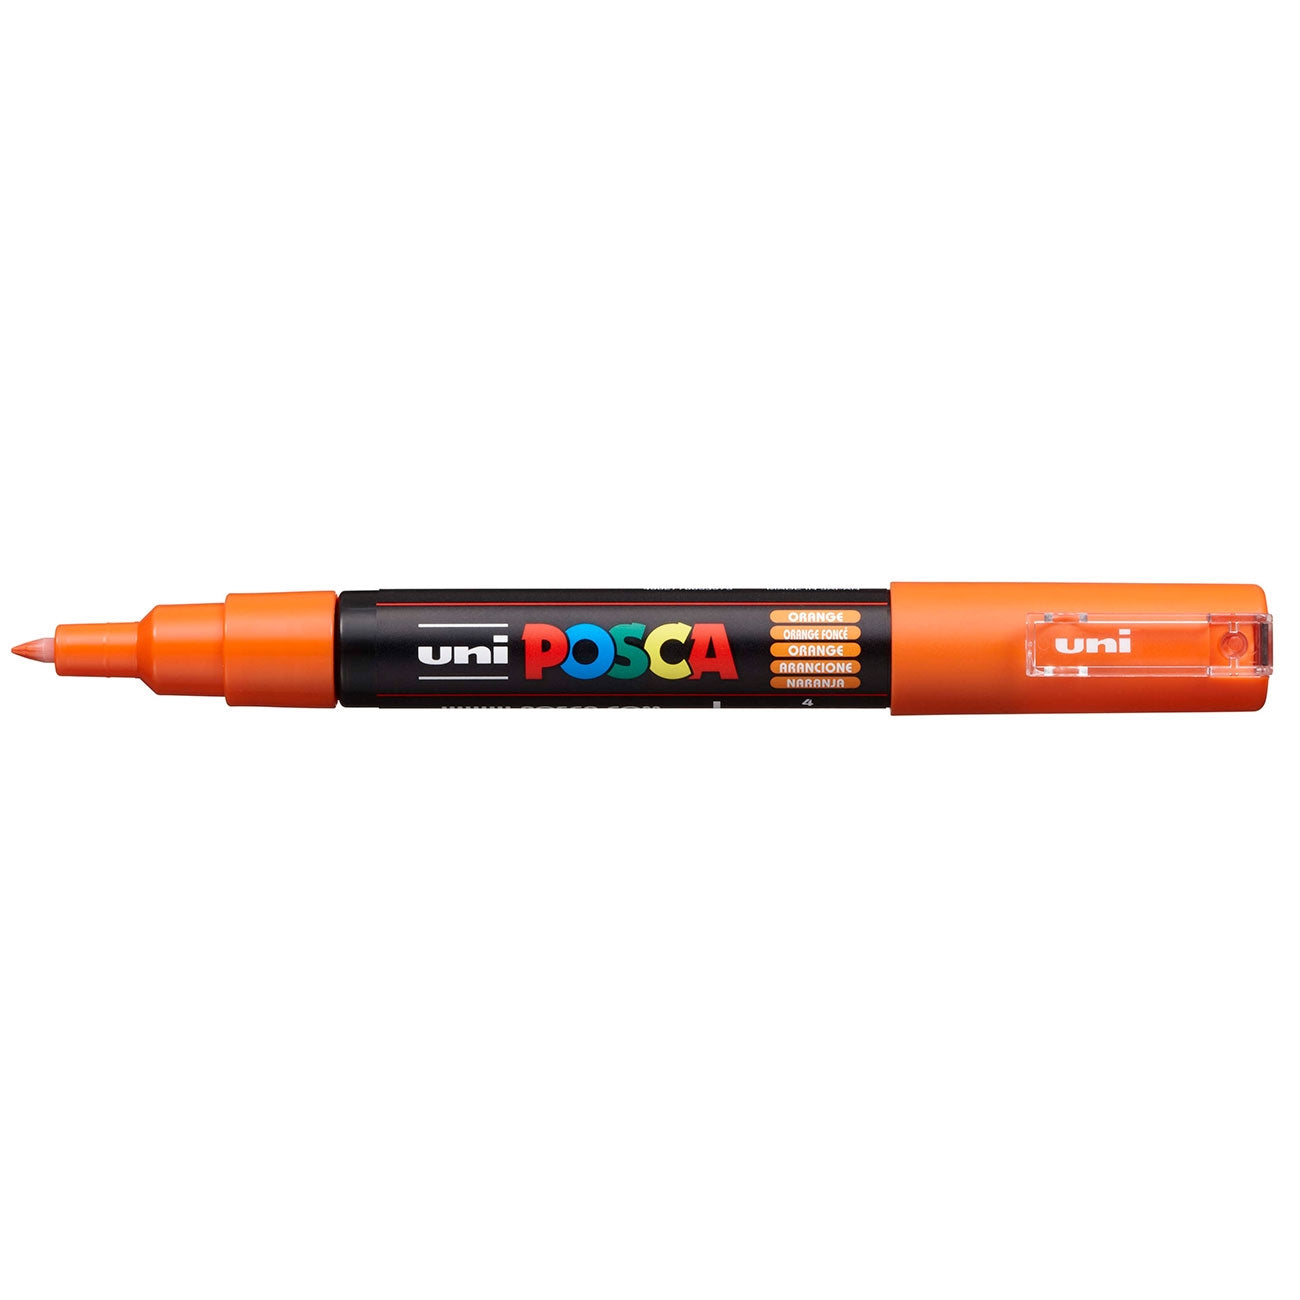 POSCA Acrylic Paint Markers - PC-1M / 0.7mm - Orange by POSCA - K. A. Artist Shop